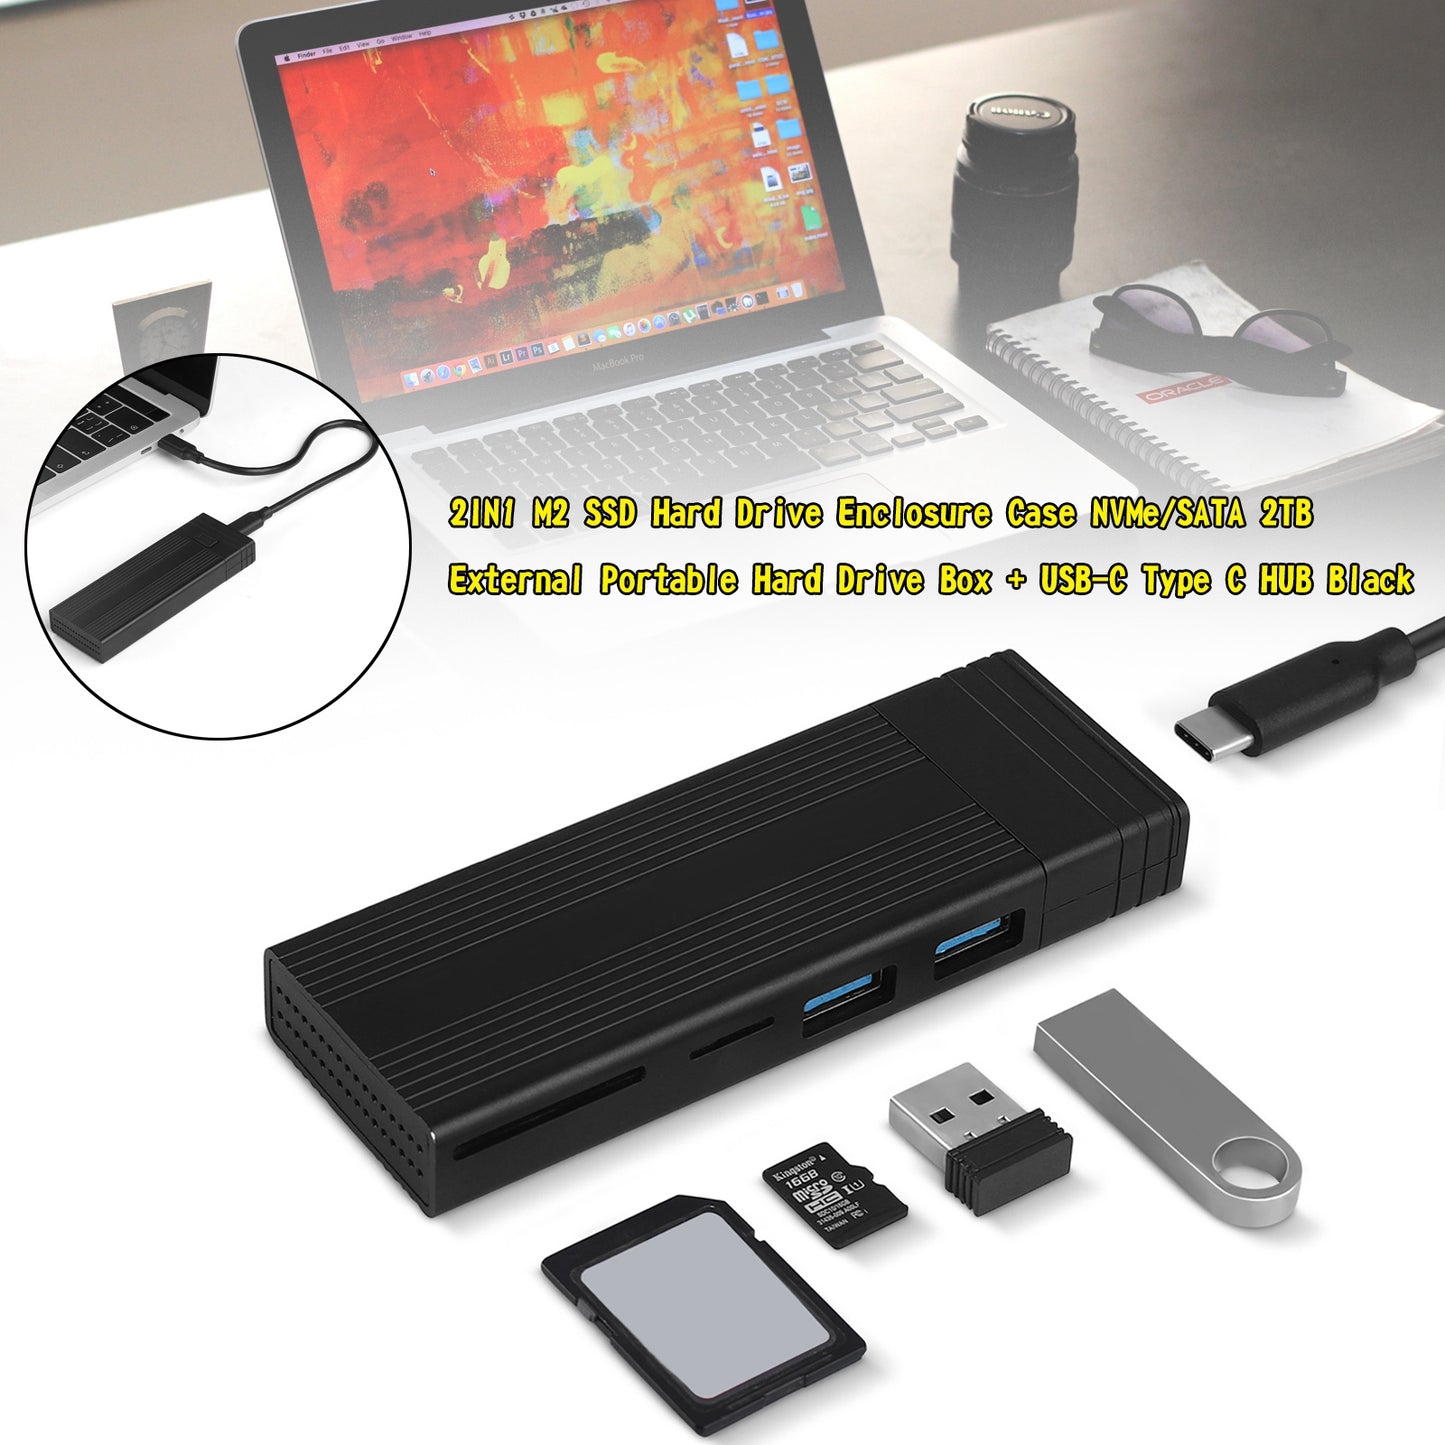 SSD Hard Drive Enclosure Case M.2 NVMe/SATA 2TB Portable Box + USB-C HUB